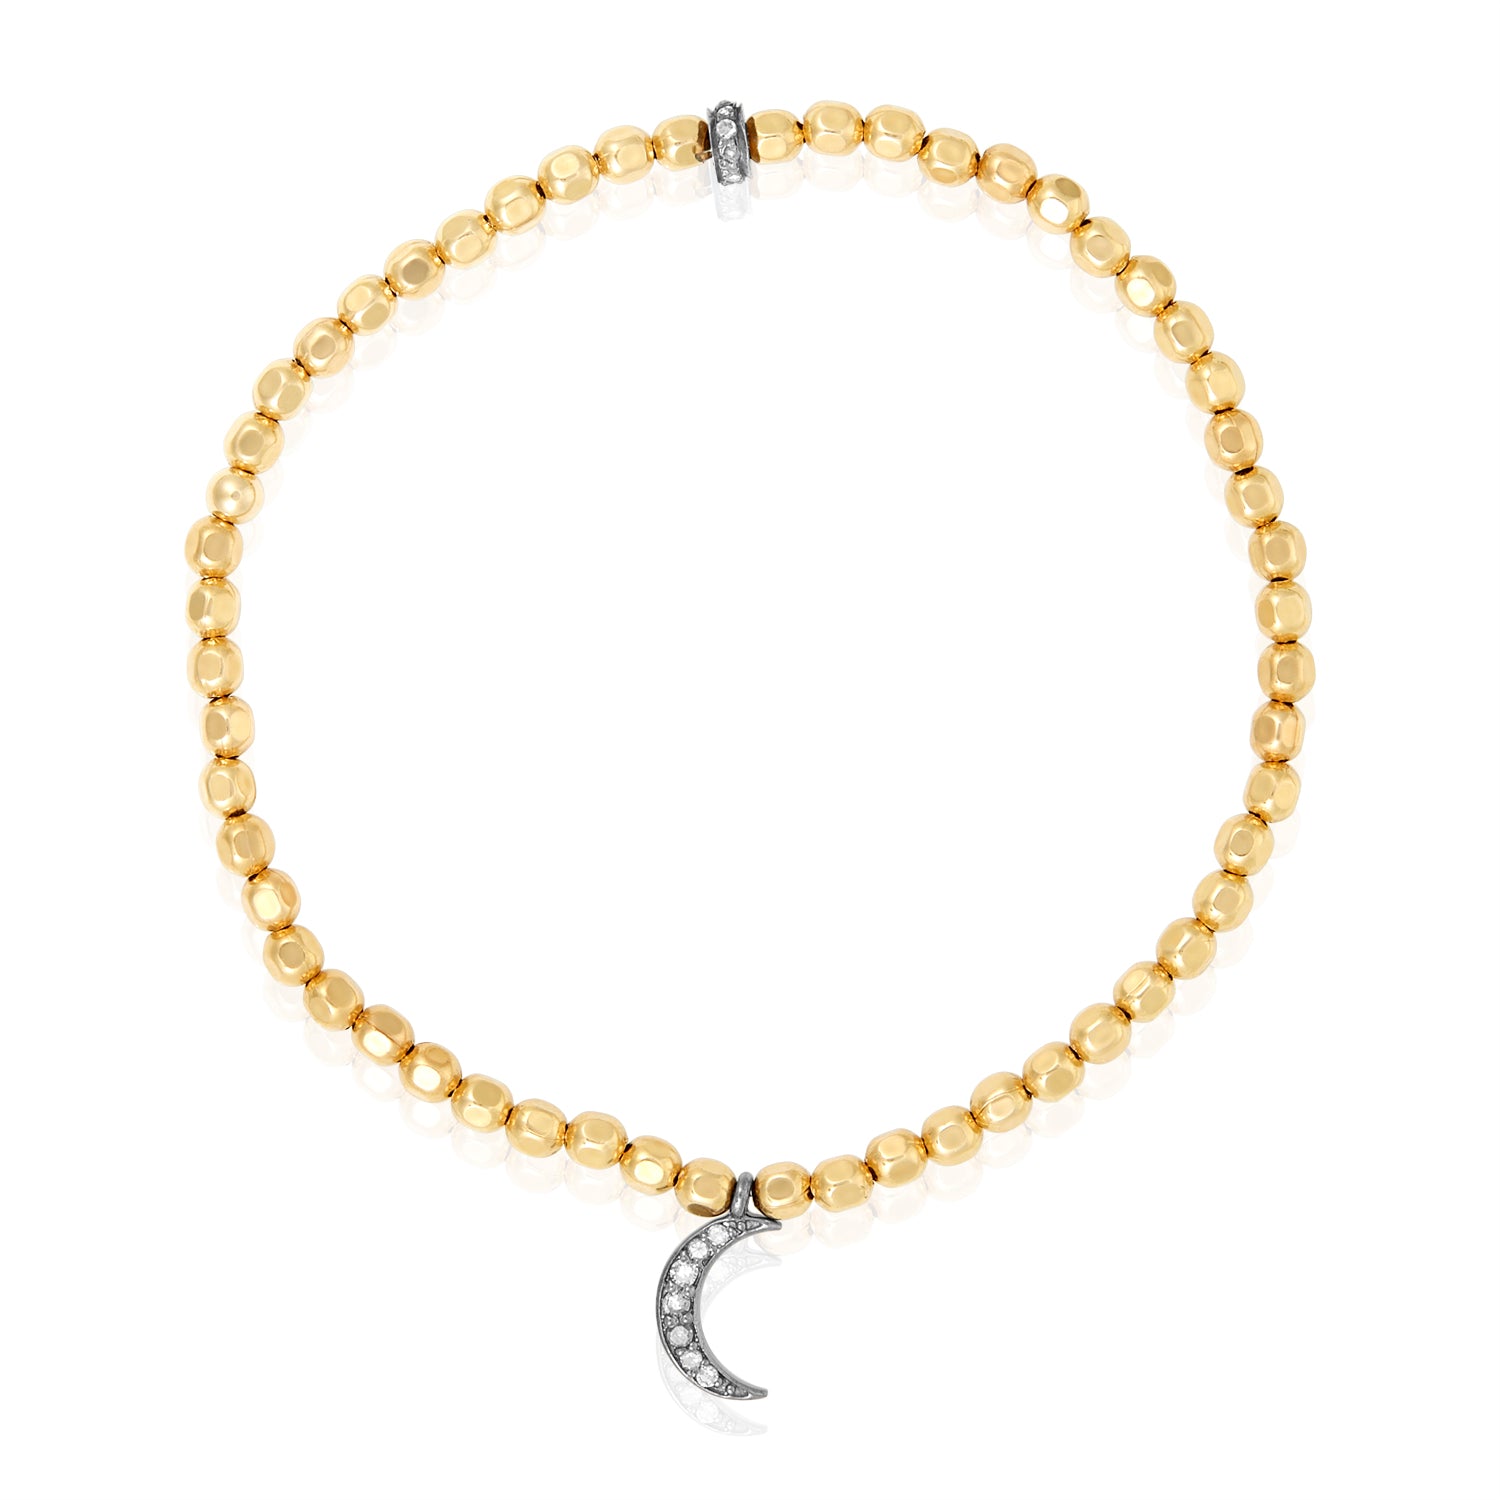 Pave Diamond Star or Moon Gold bead Stretchy Bracelet